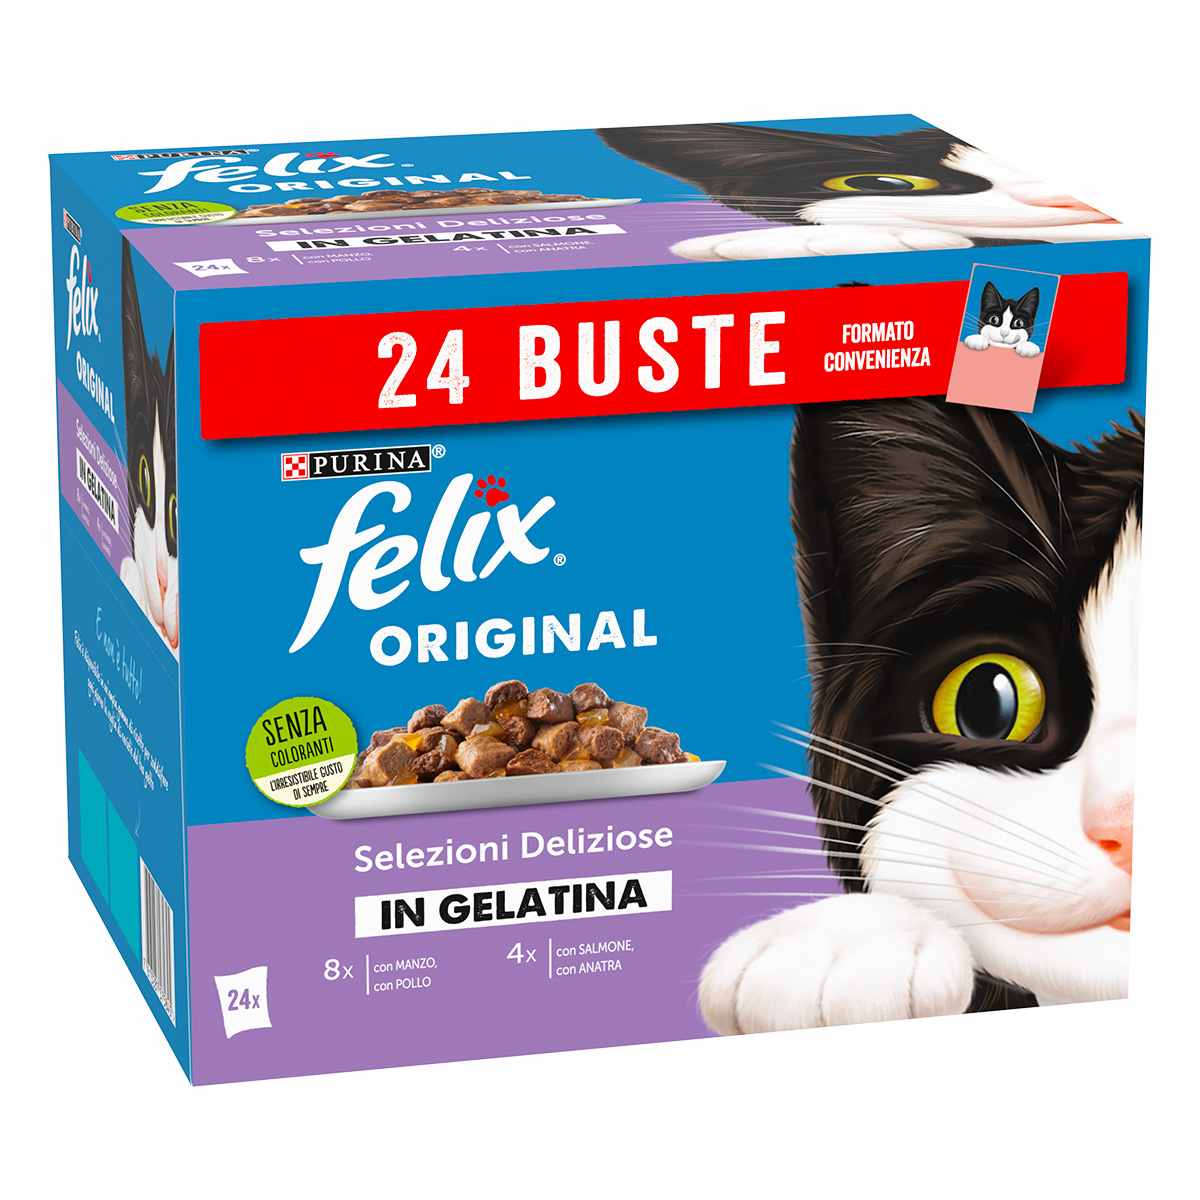 Felix Original Selezioni Deliziose in gelatina